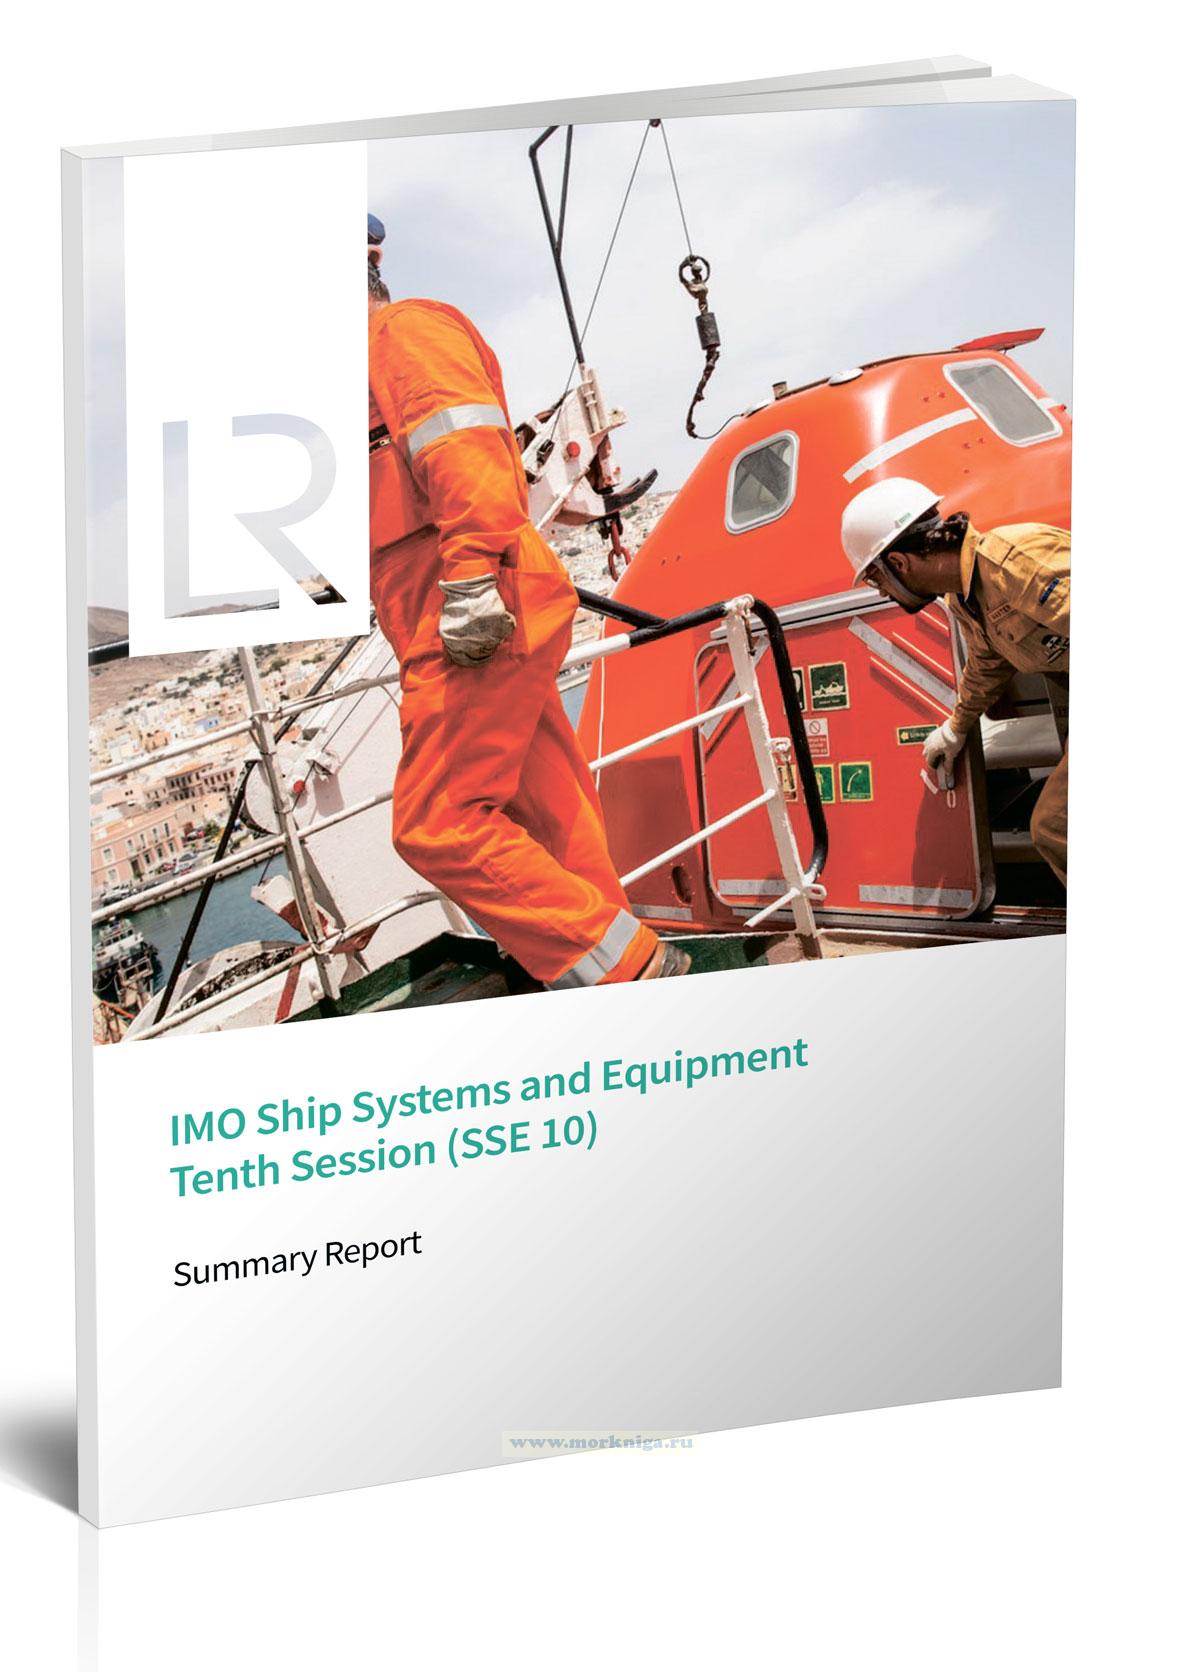 IMO Ship Systems and Equipment Tenth Session (SSE 10). Summary Report/Десятая сессия ИМО по судовым системам и оборудованию (SSE 10). Краткий доклад